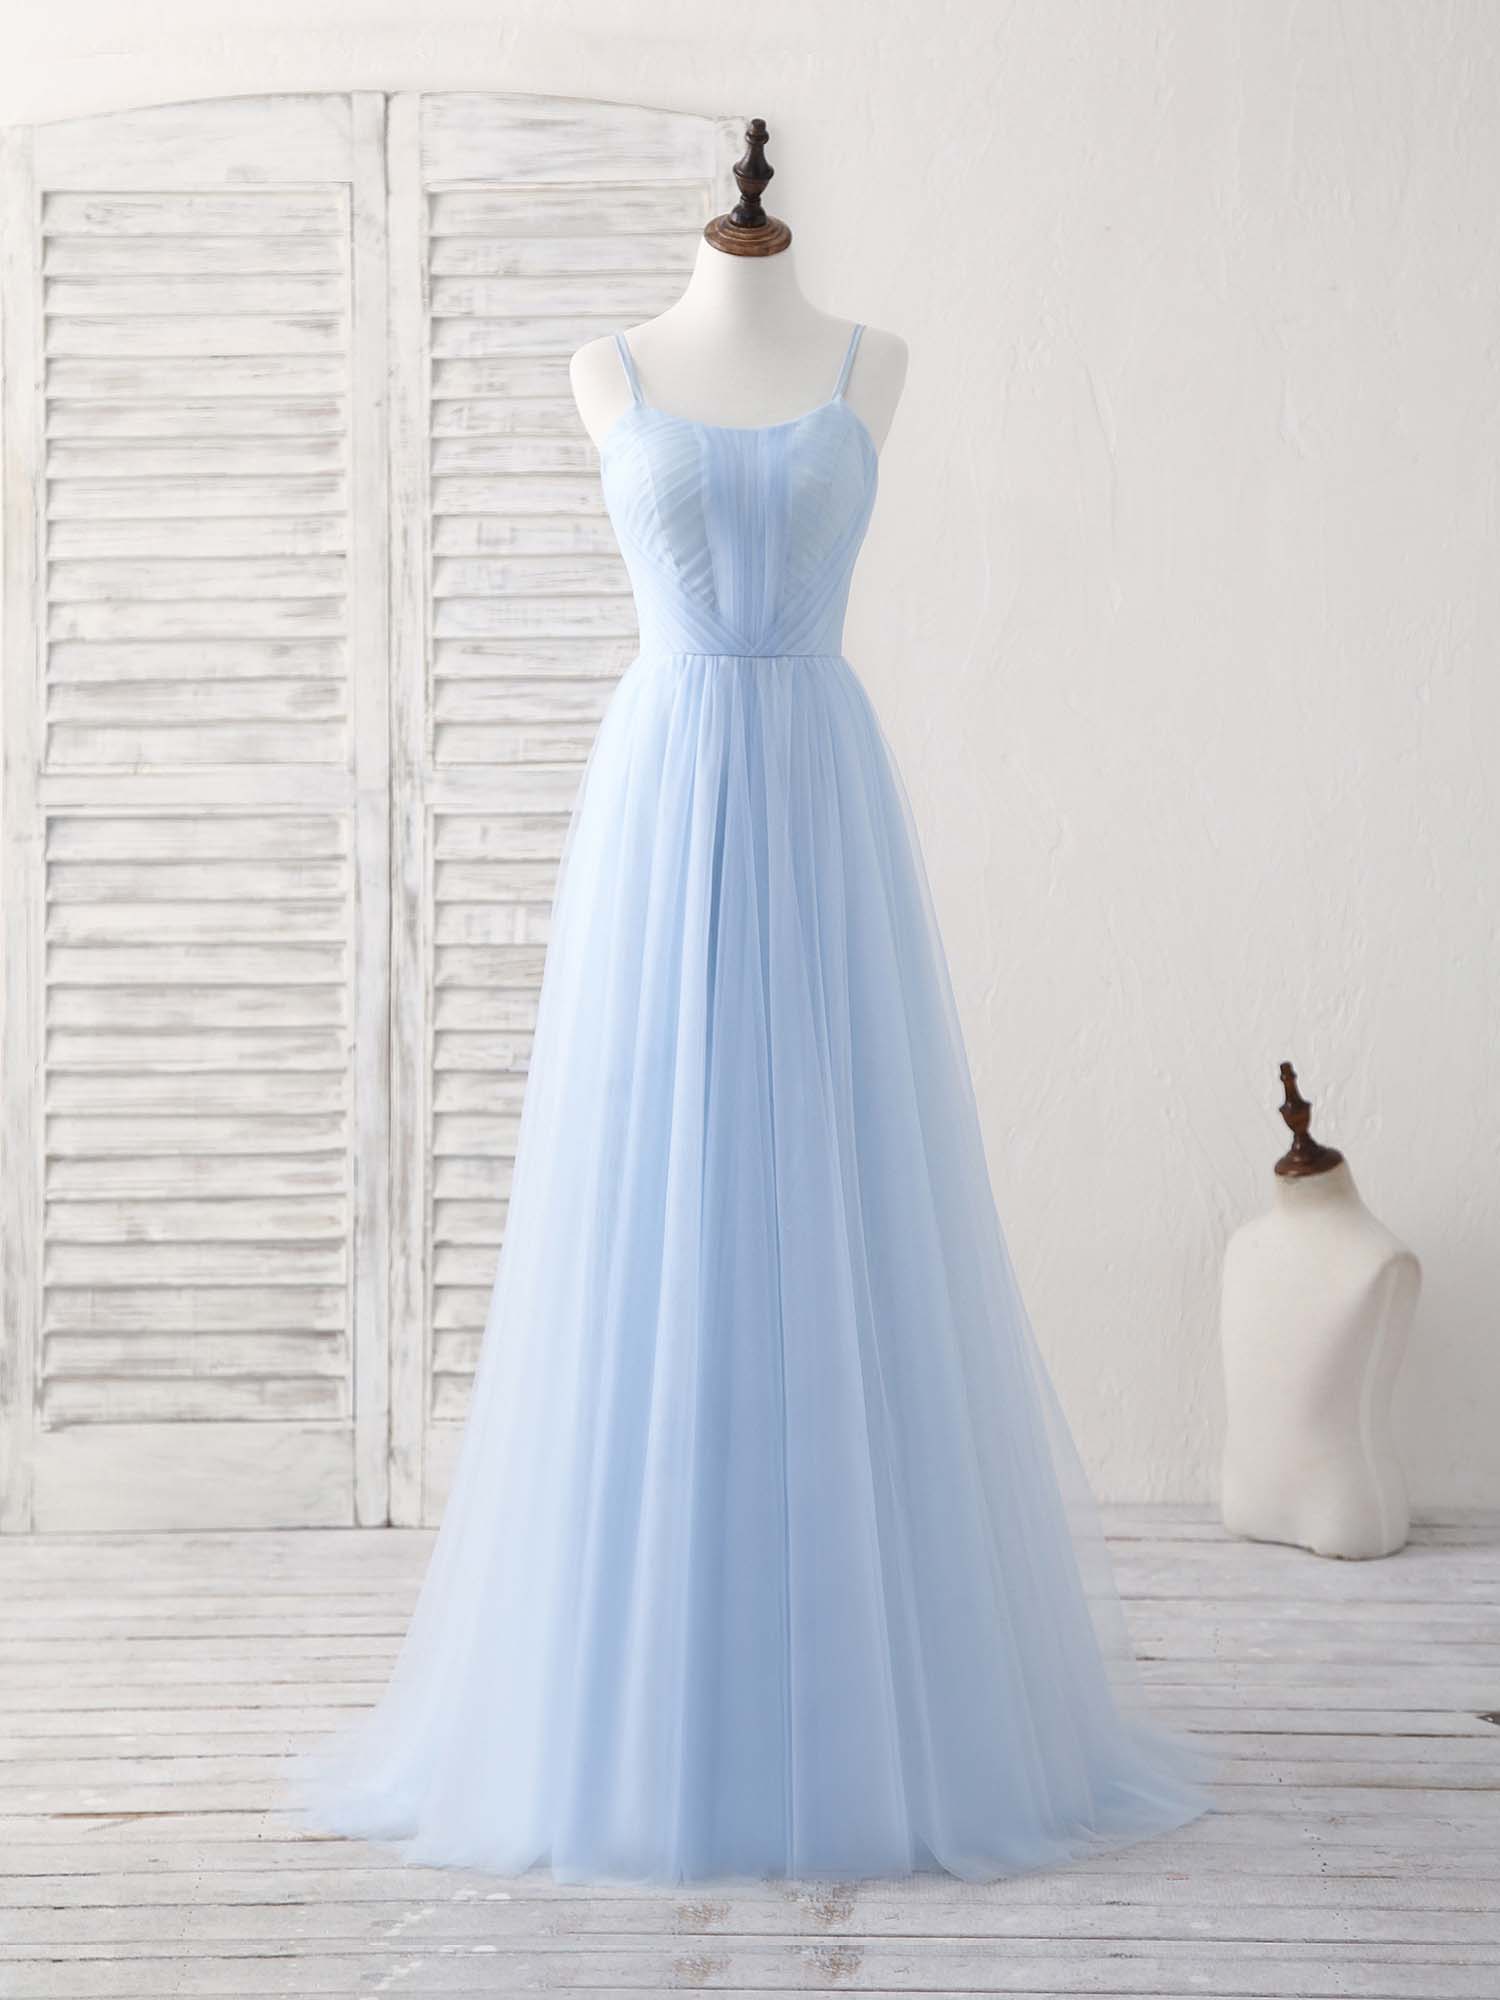 Simple Blue Tulle Long Corset Prom Dress Blue Corset Bridesmaid Dress outfit, Party Dress Short